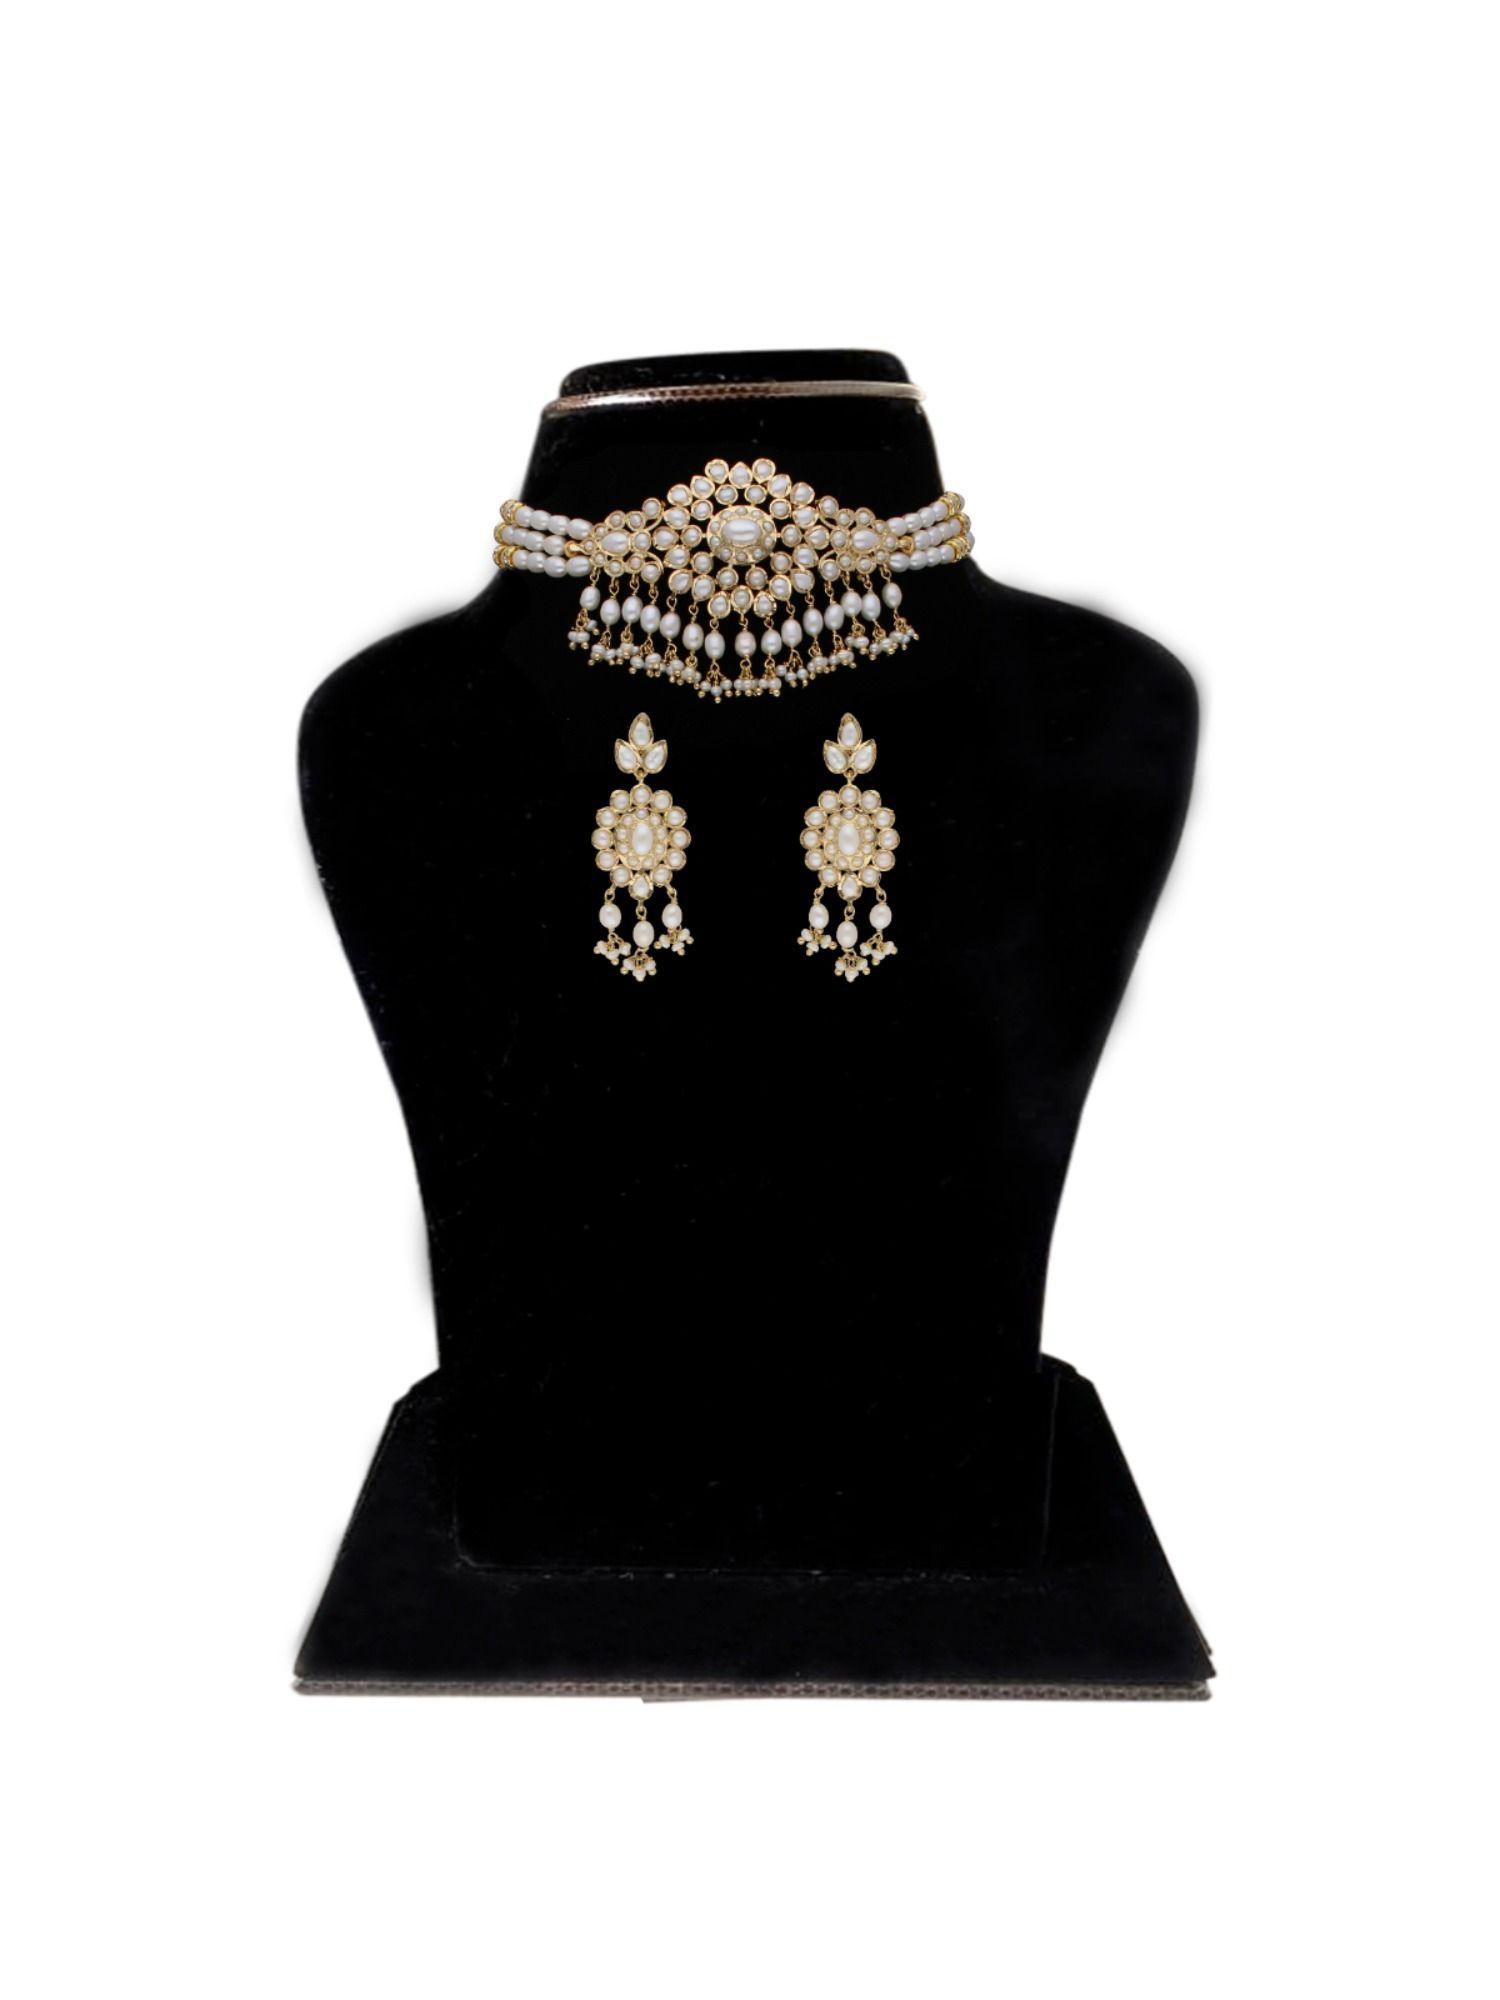 vansha 3 line round pearl choker necklace set